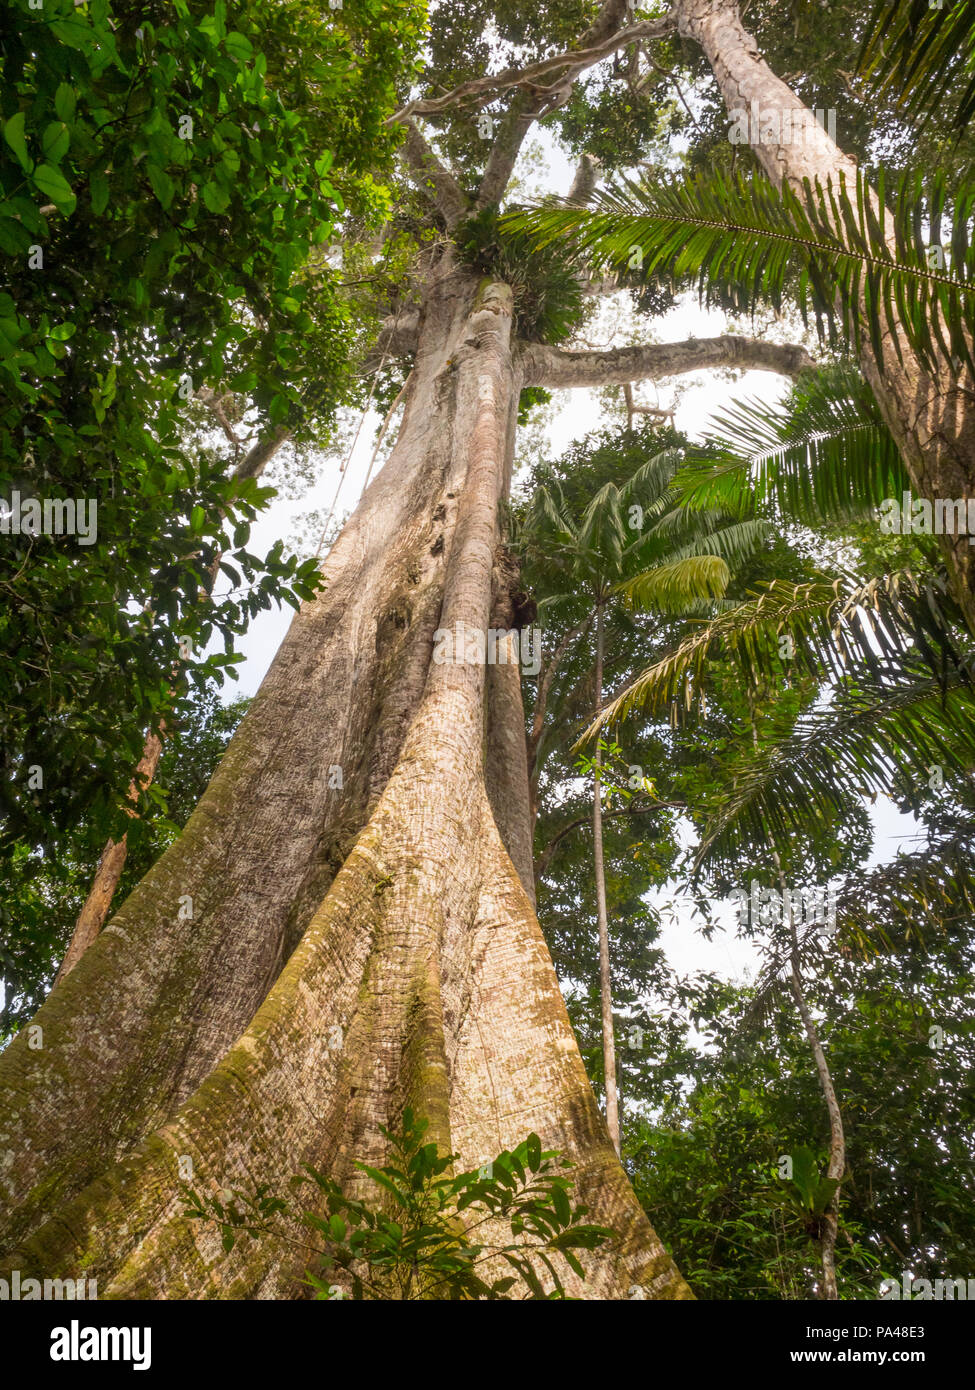 Big ceiba, kapok tree,  on the bank of the Javari River. Ceiba pentandra. Amazon Stock Photo